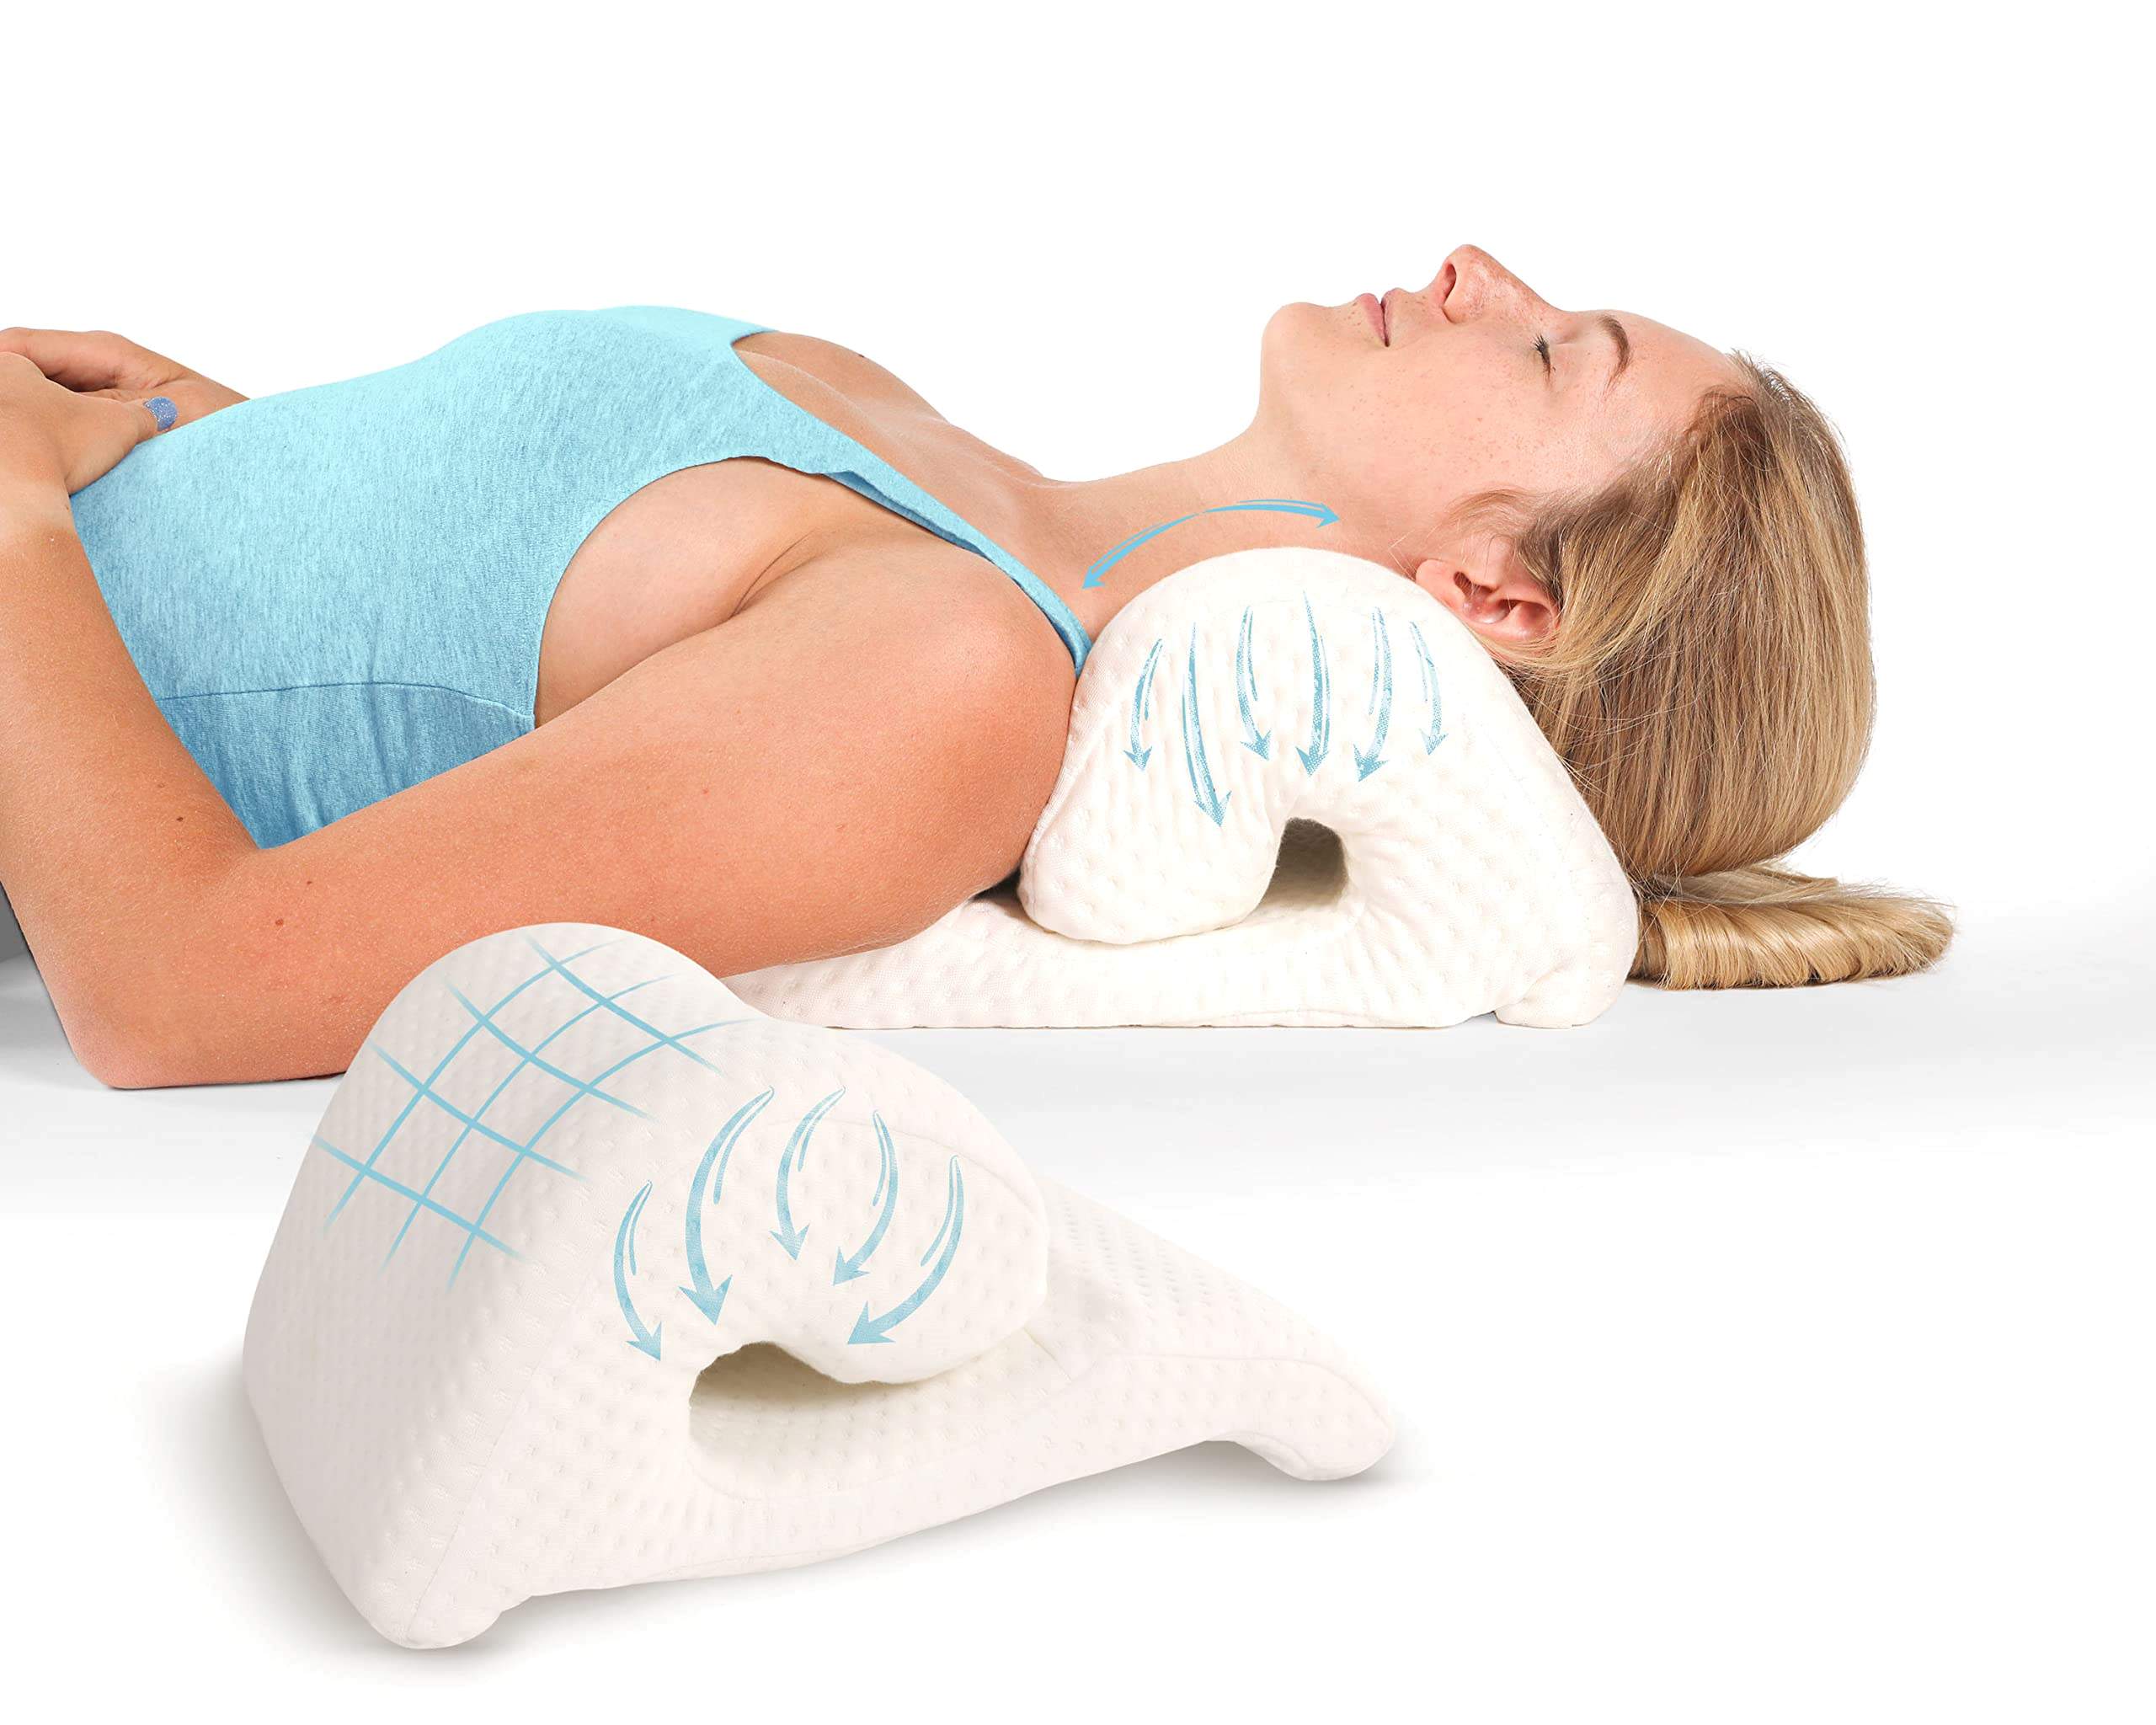 anzhixiu Car Neck Pillow for Driving- Memory Foam Neck Pillow for Car